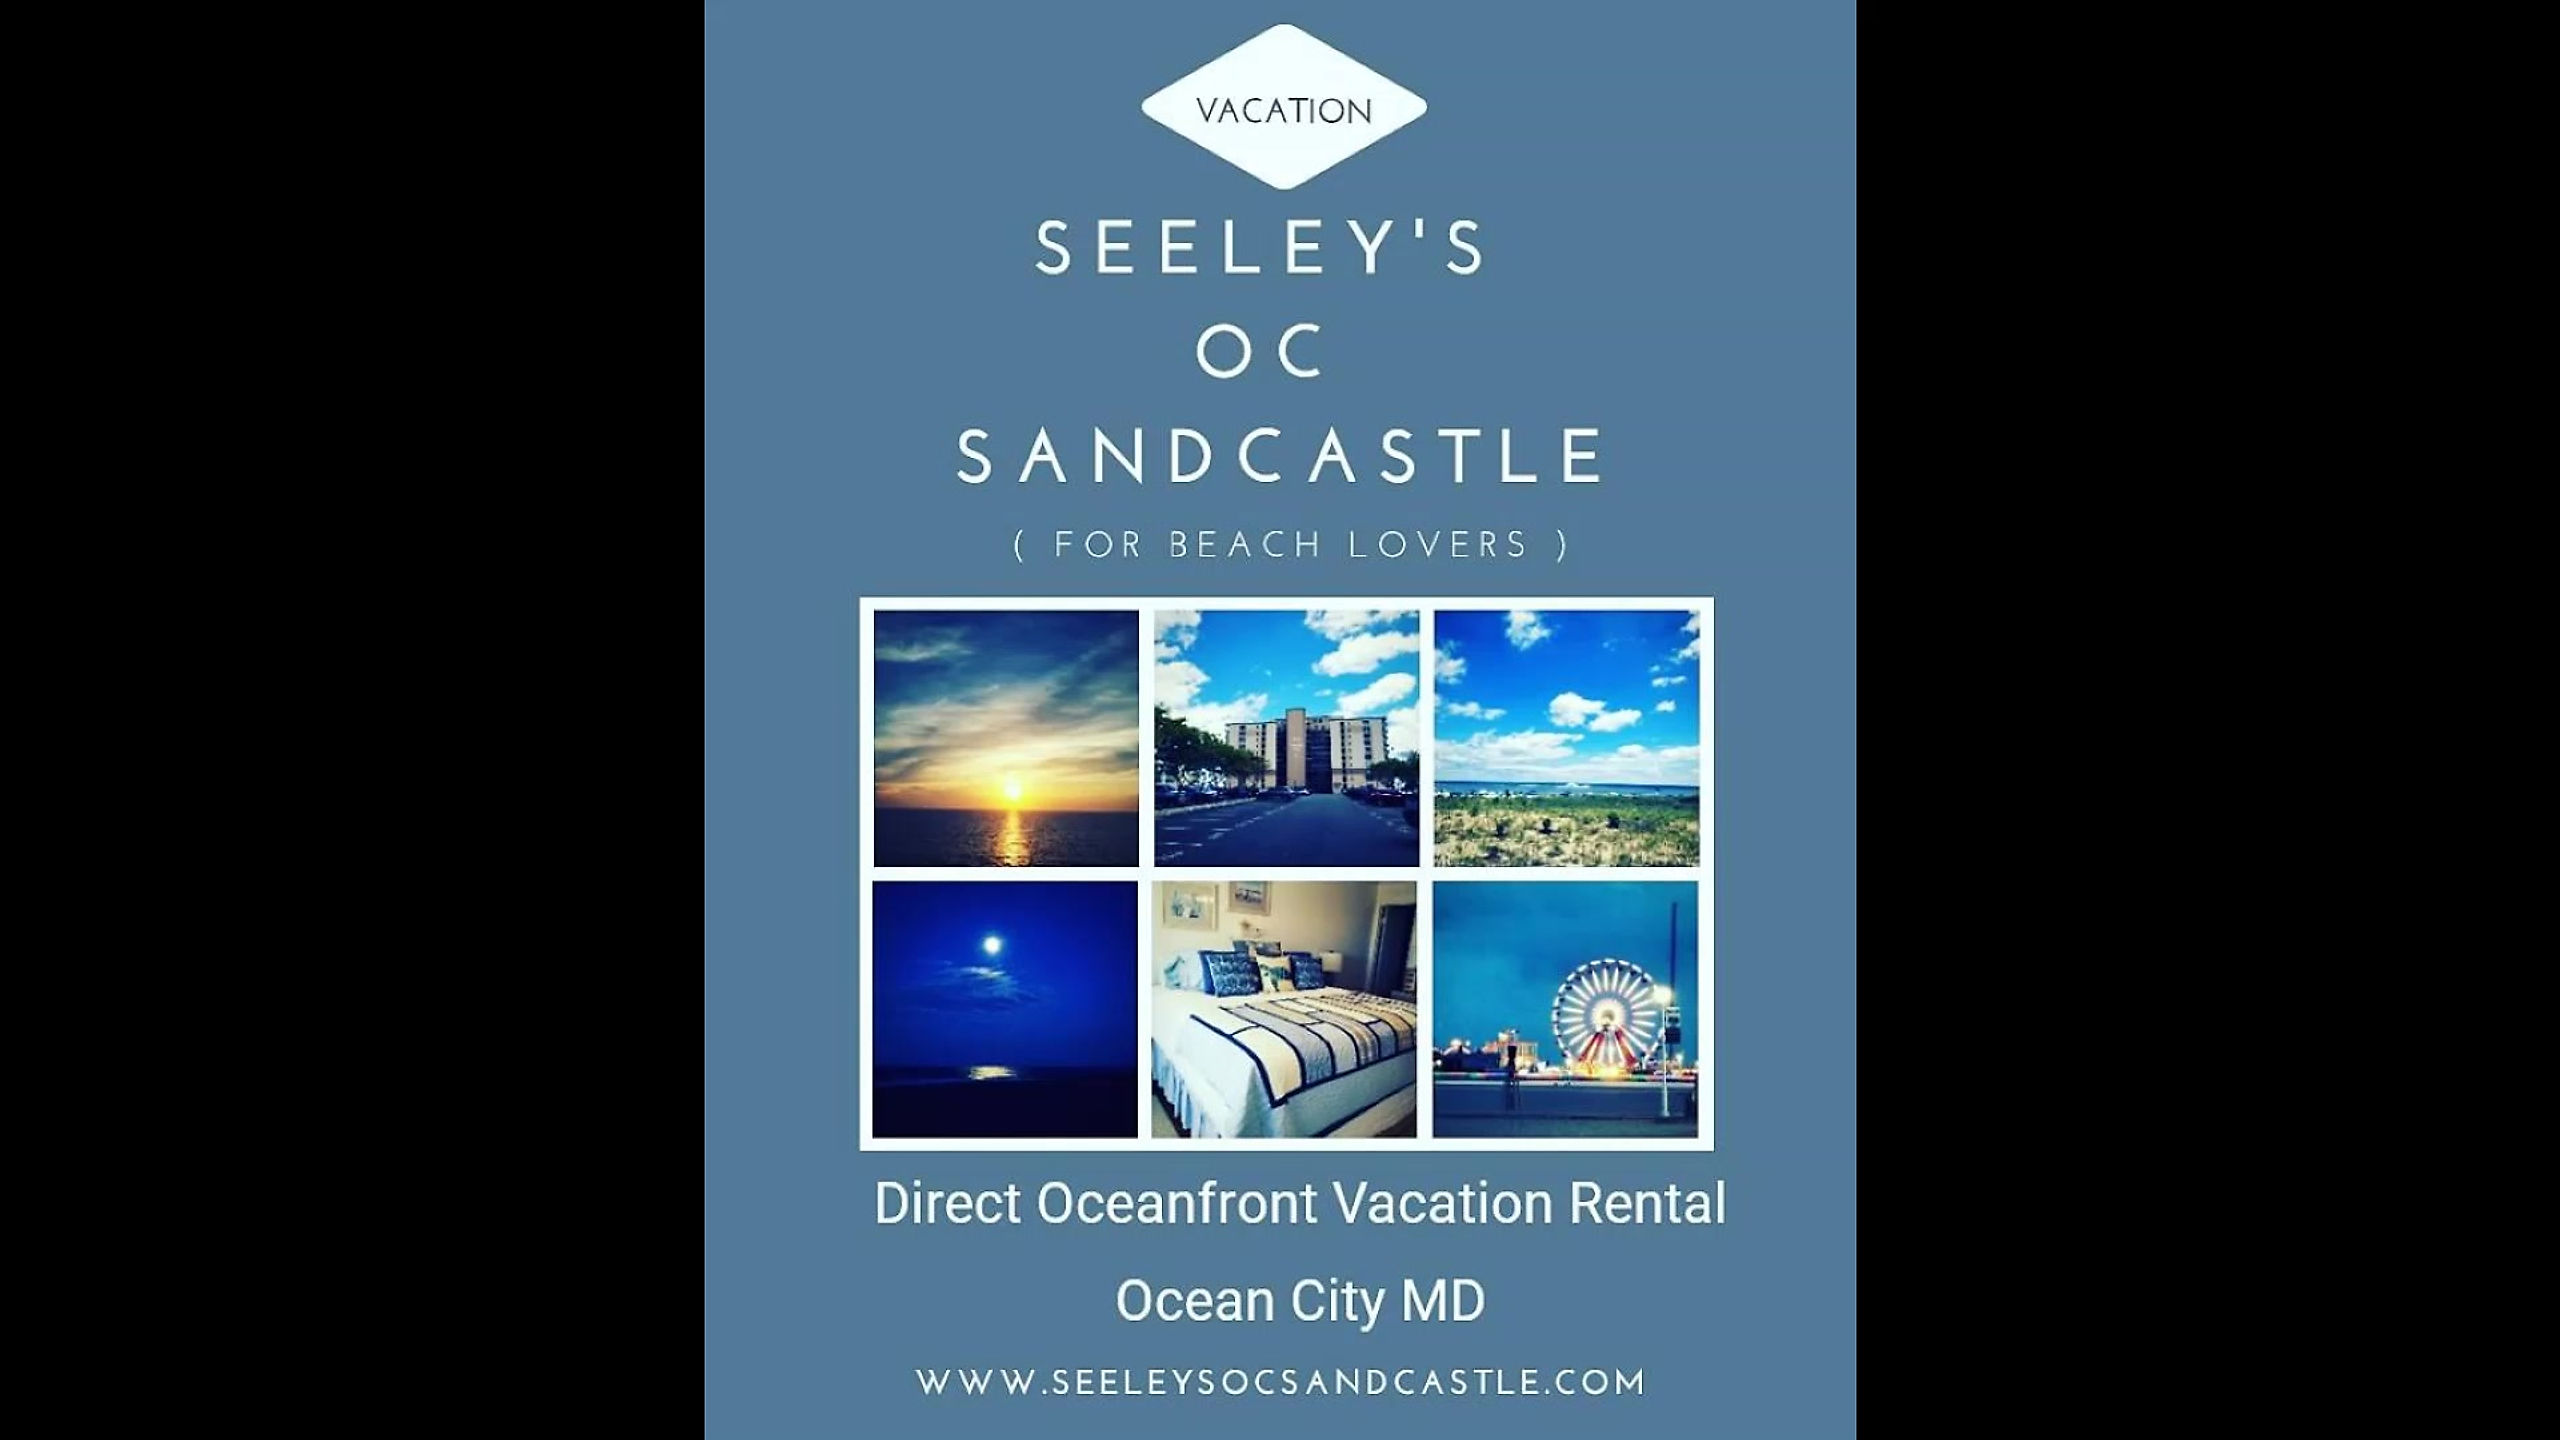 Seeley's OC Sandcastle